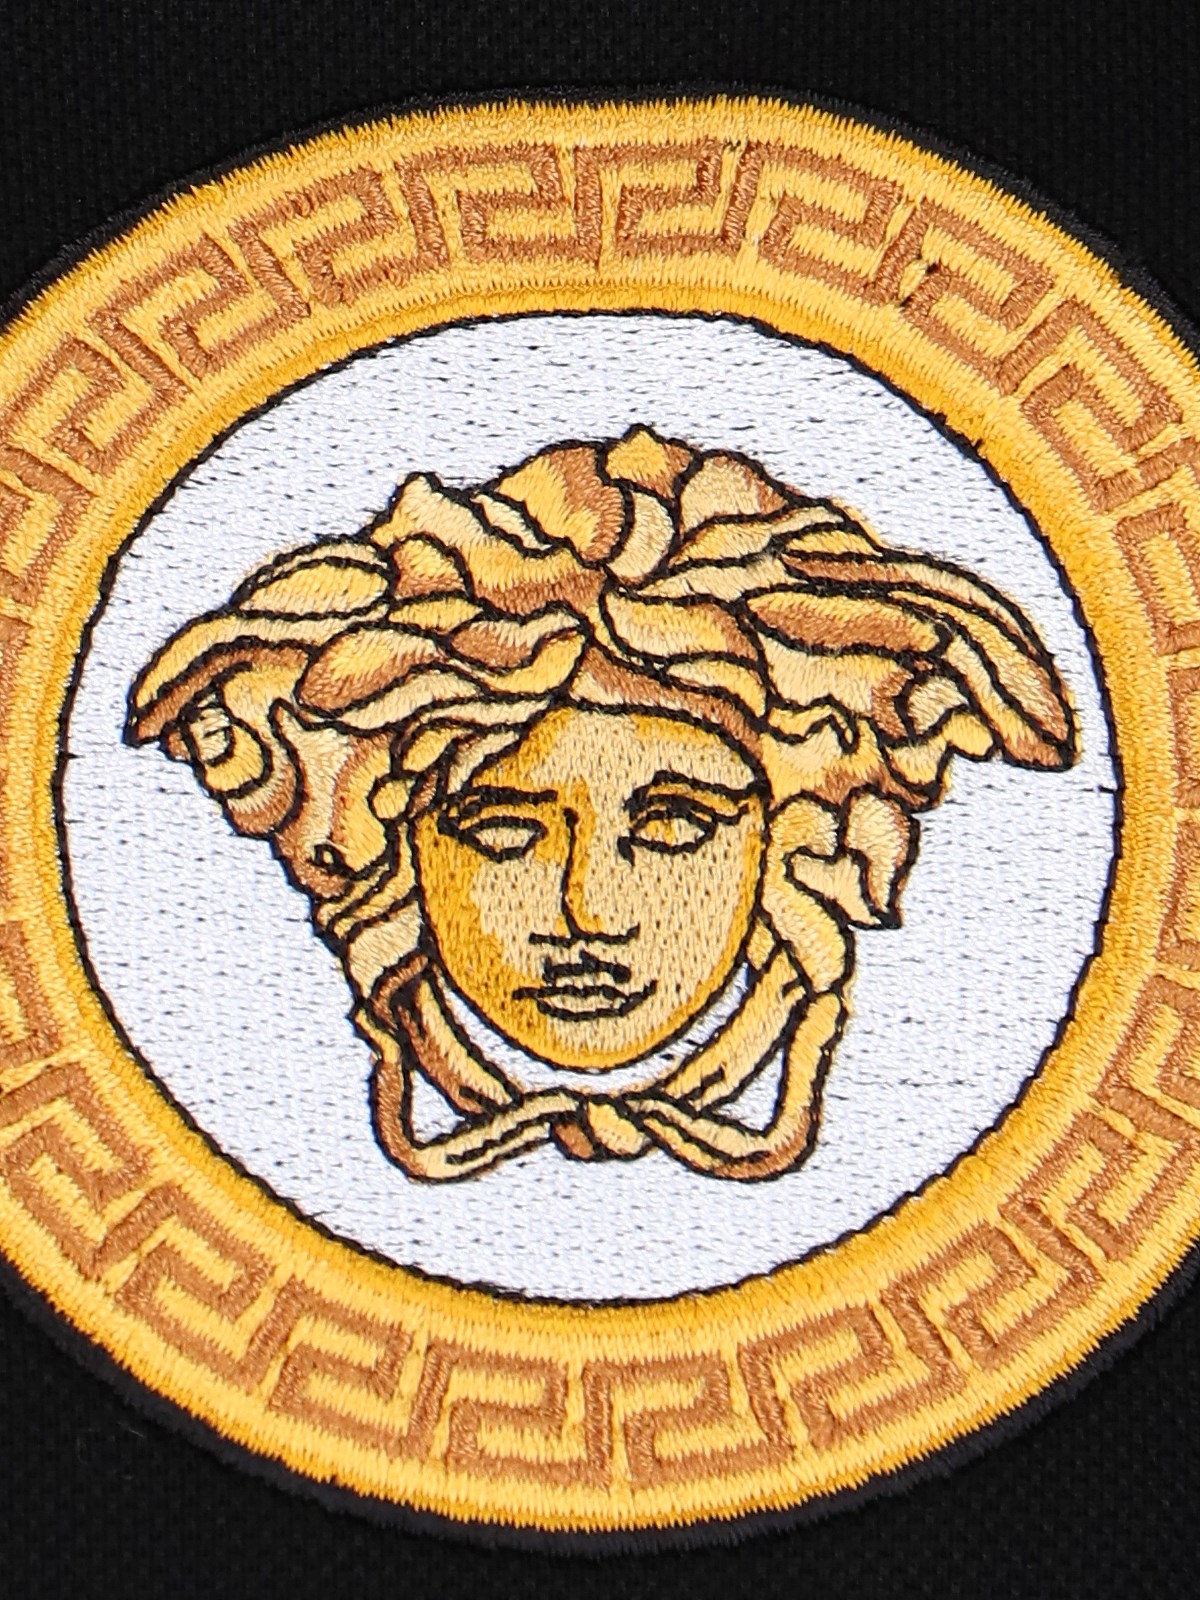 Gucci Versace Medusa Logo Embroidery Design | stickhealthcare.co.uk